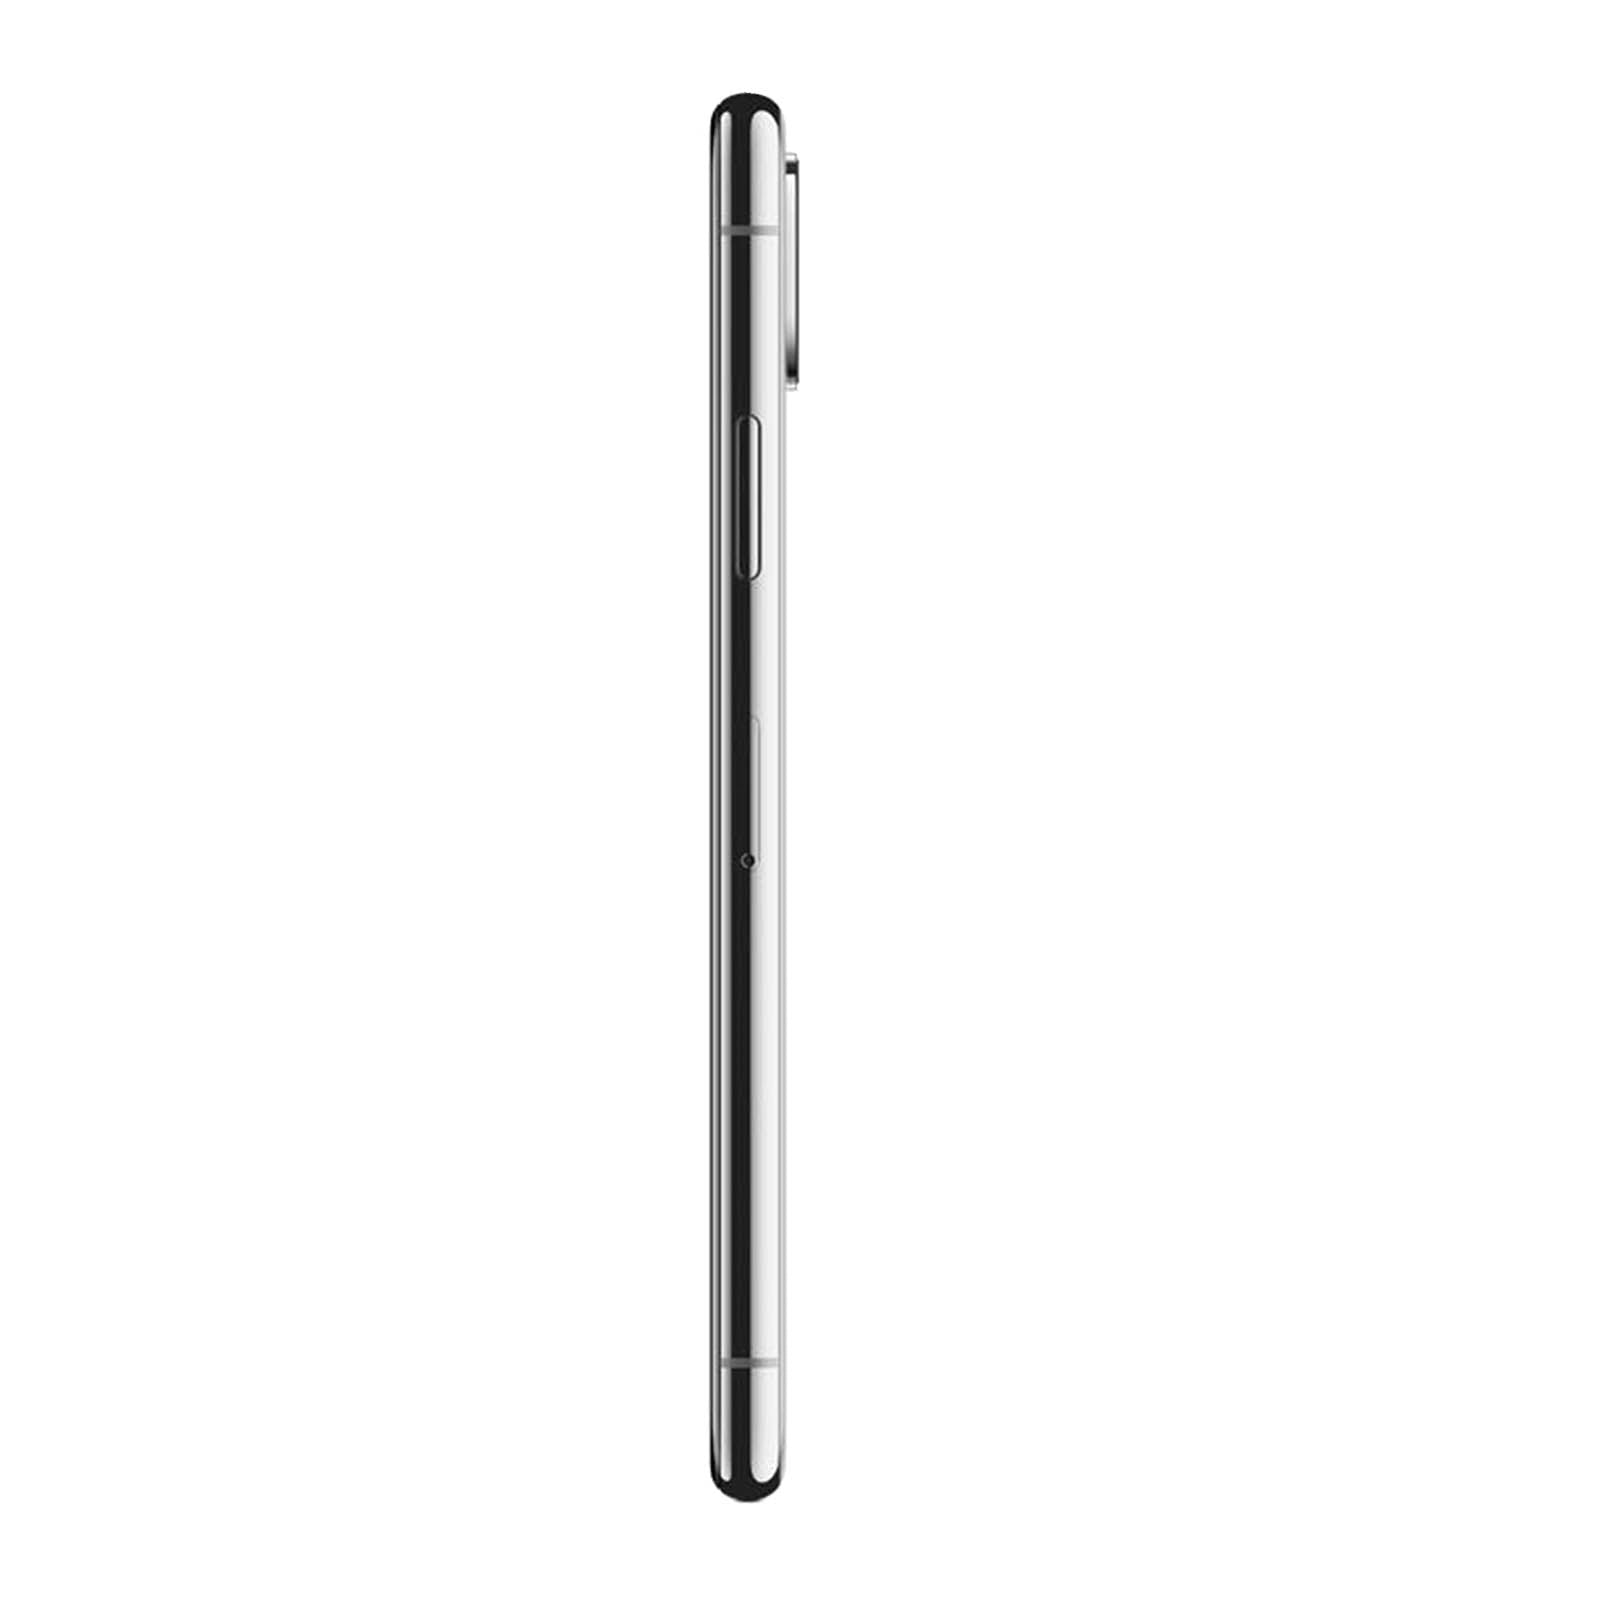 Apple iPhone XS Max 64GB Space Grey Very Good - Unlocked